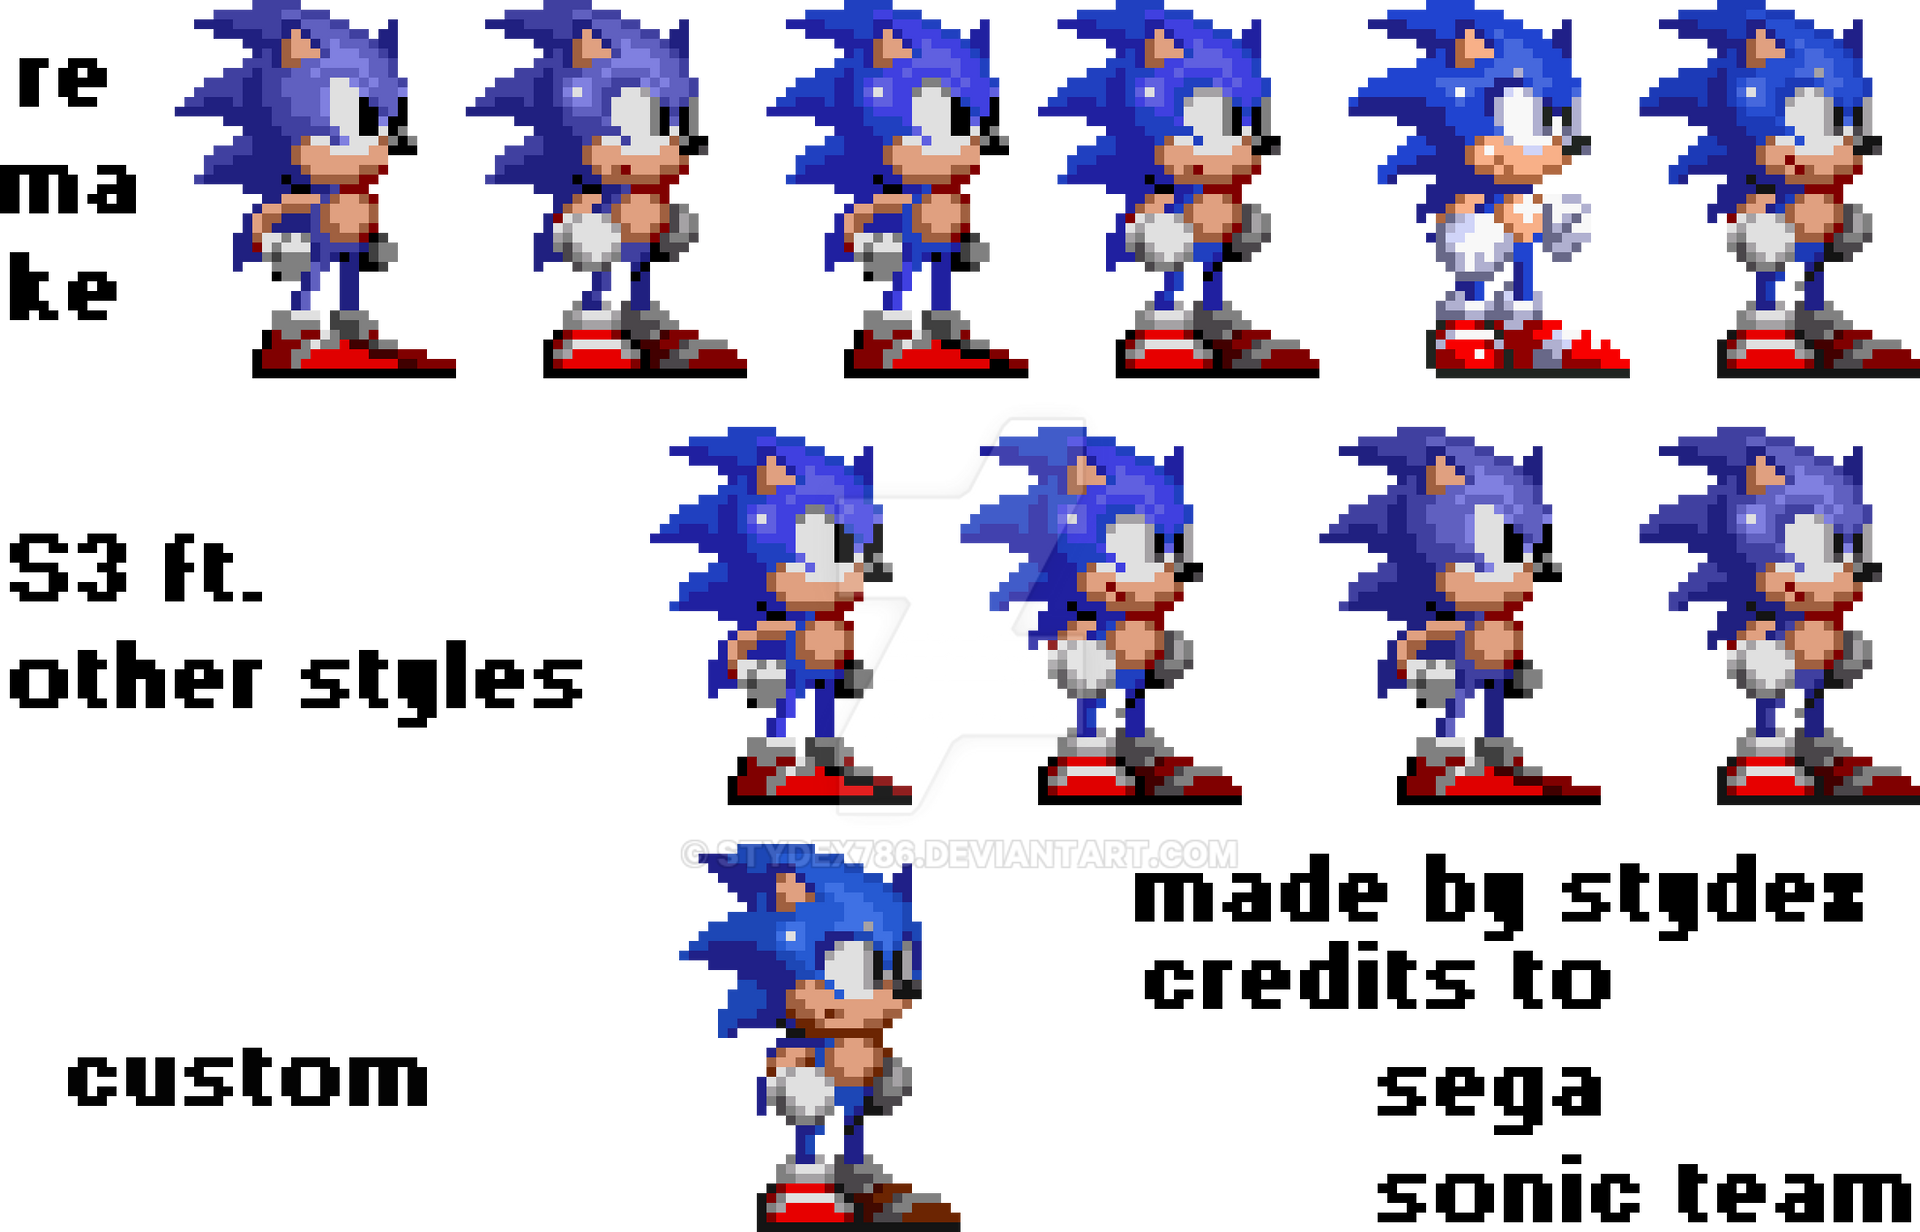 Sonic 3 Styled Dark Sonic by TannerTW25 on DeviantArt